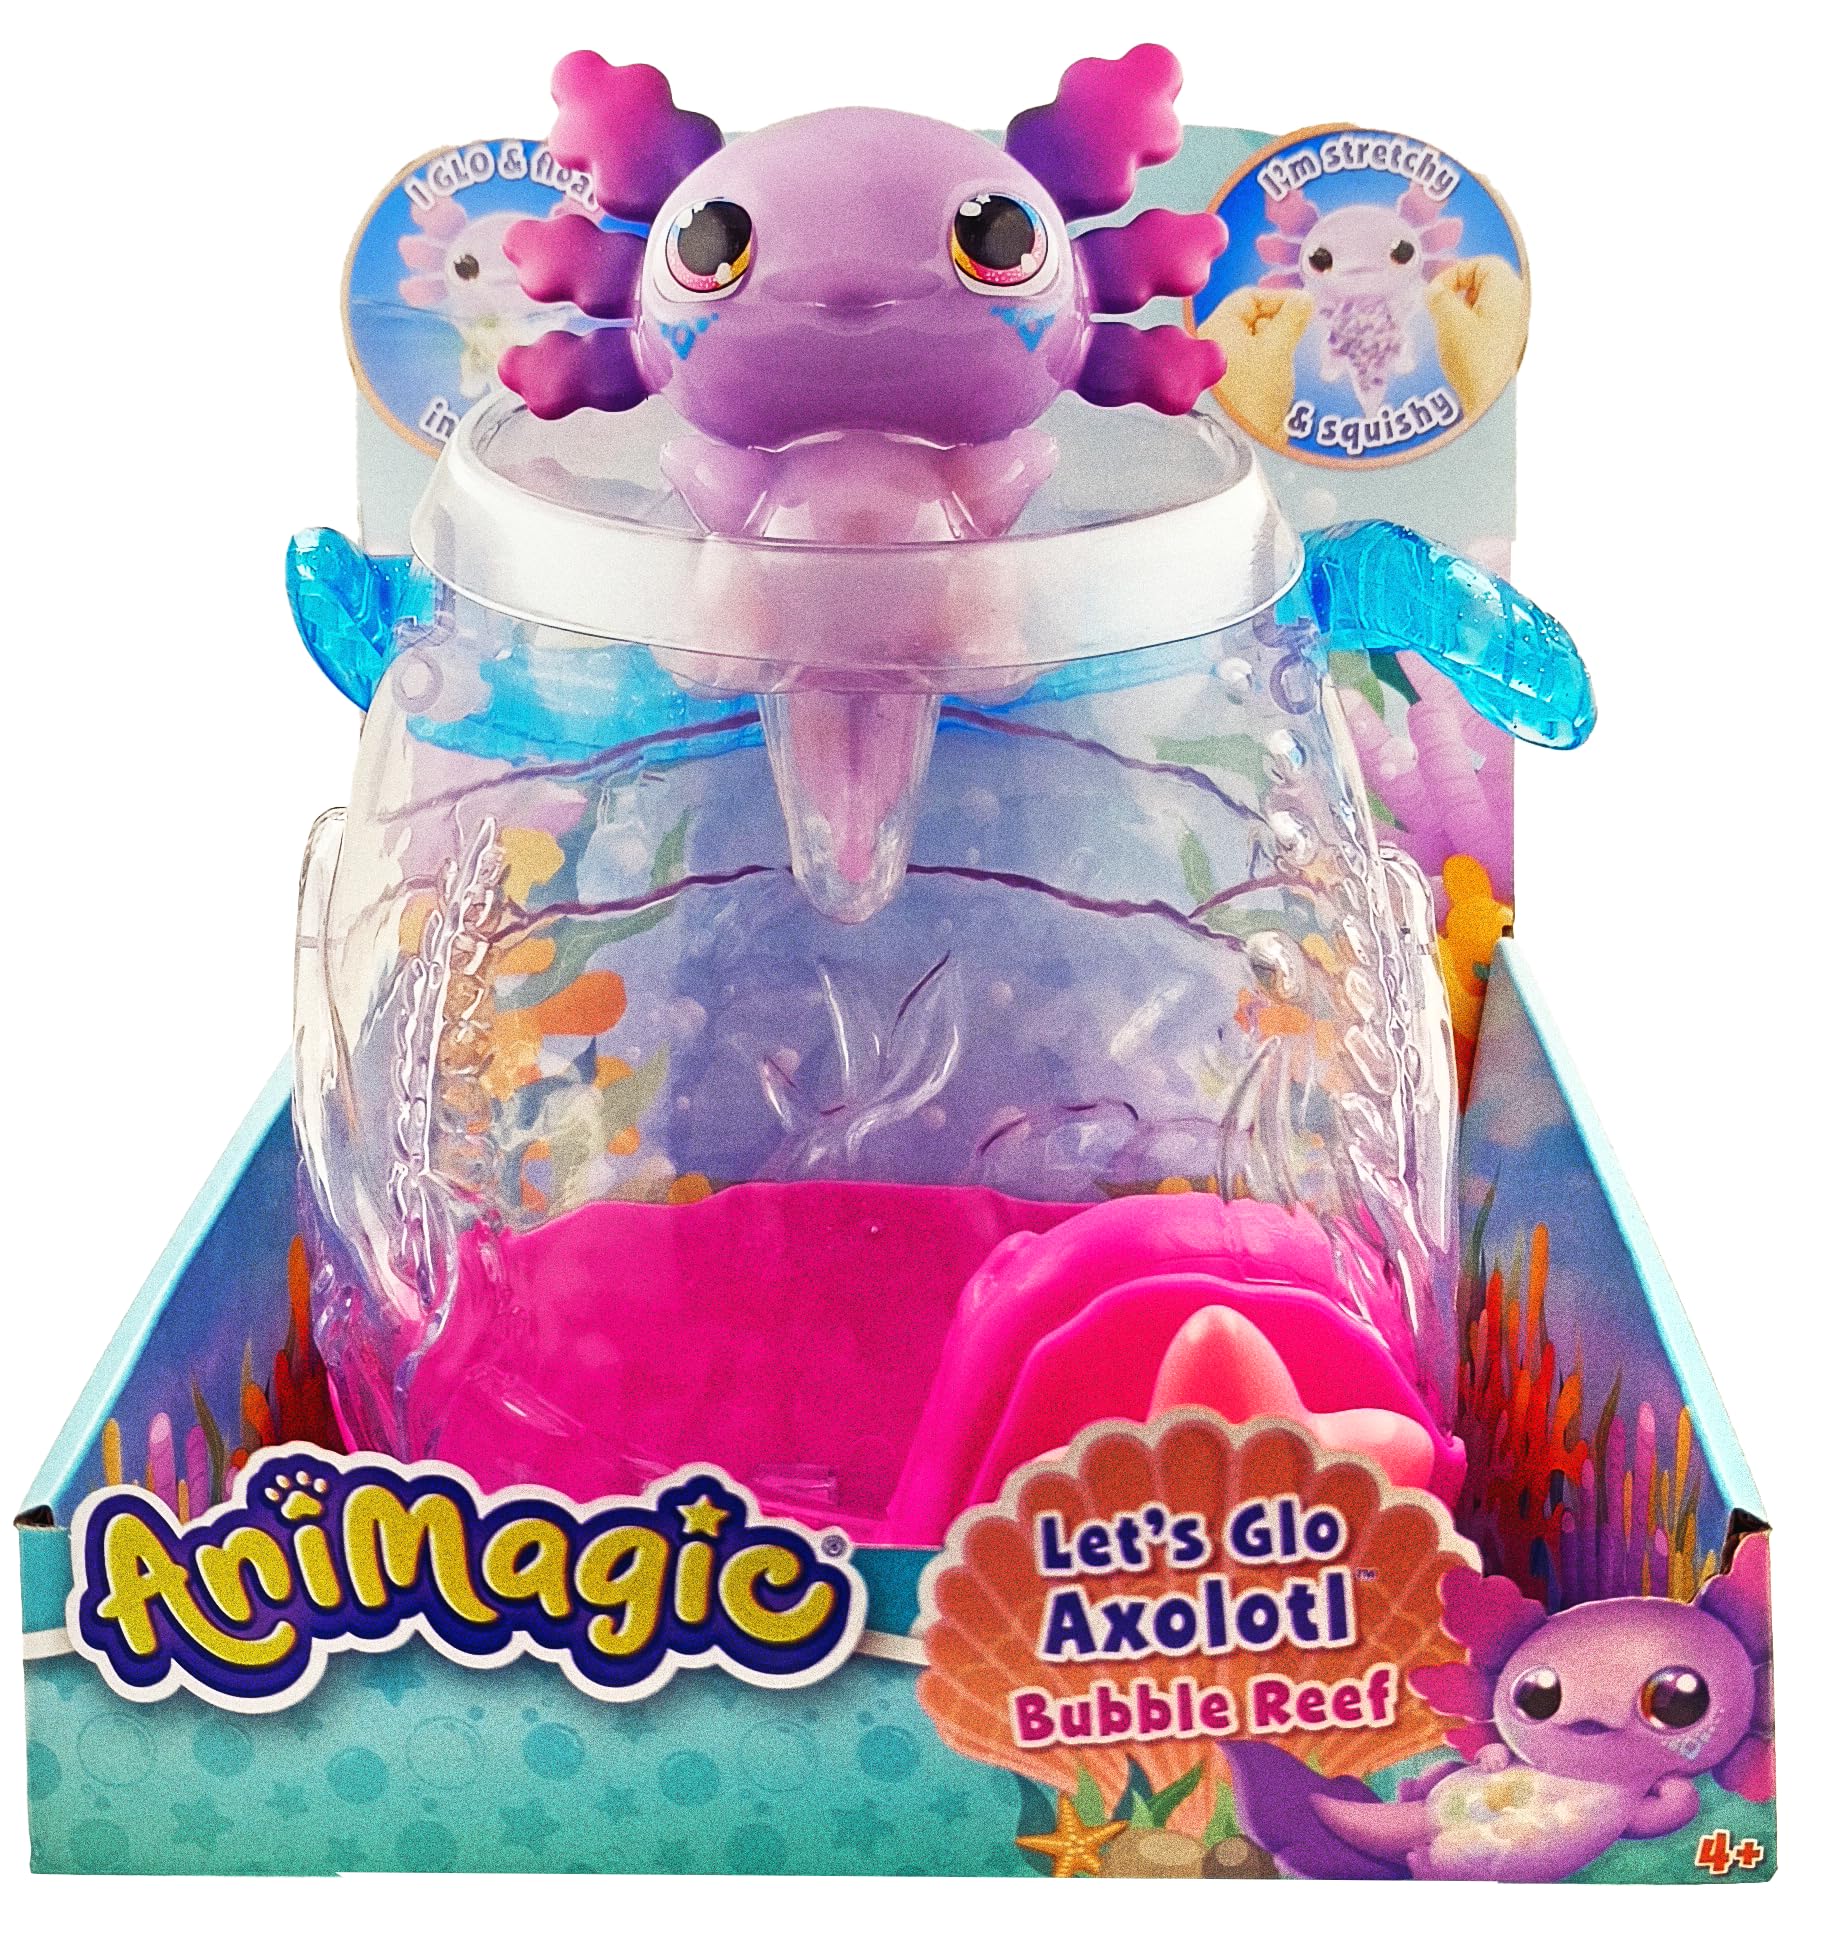 Animagic 930943.006 Let's Glo Axolotl Bubble Reef